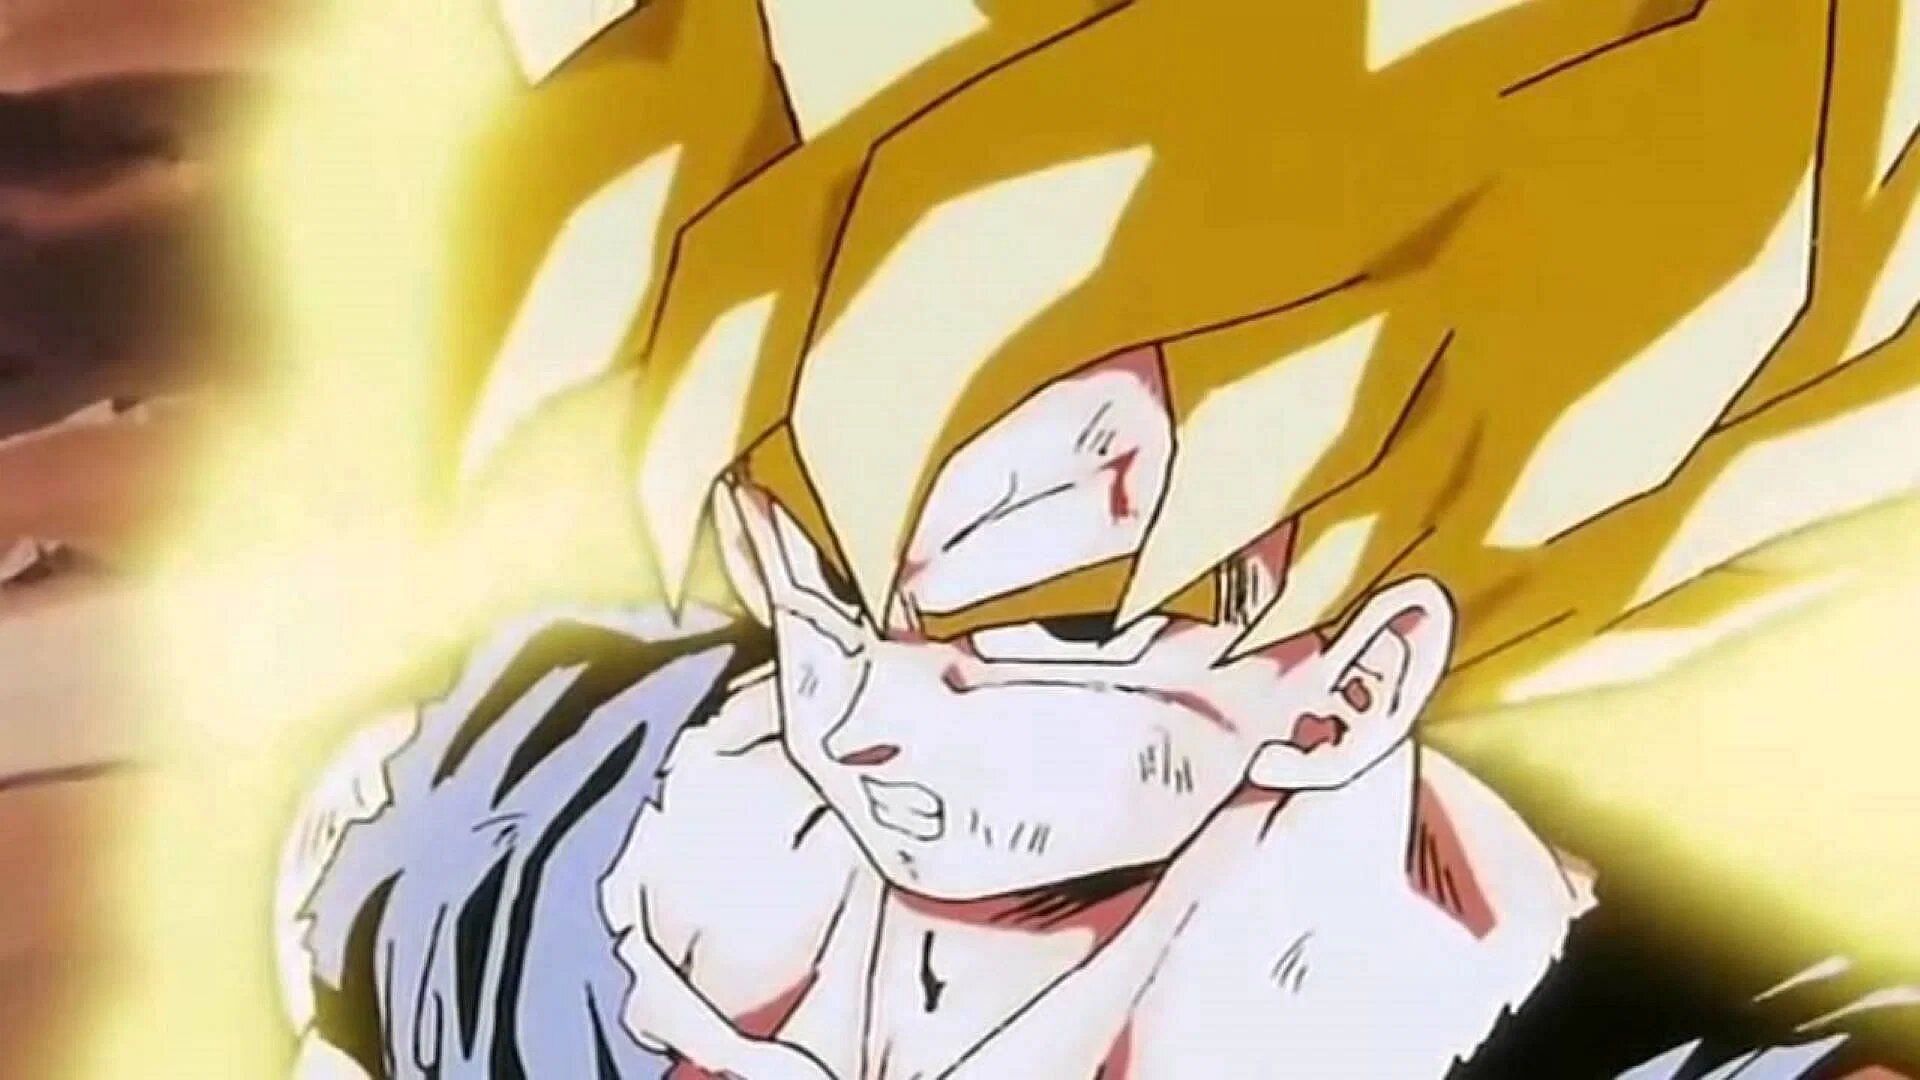 Goku as a Super Saiyan in the anime (Image via Toei Animation)